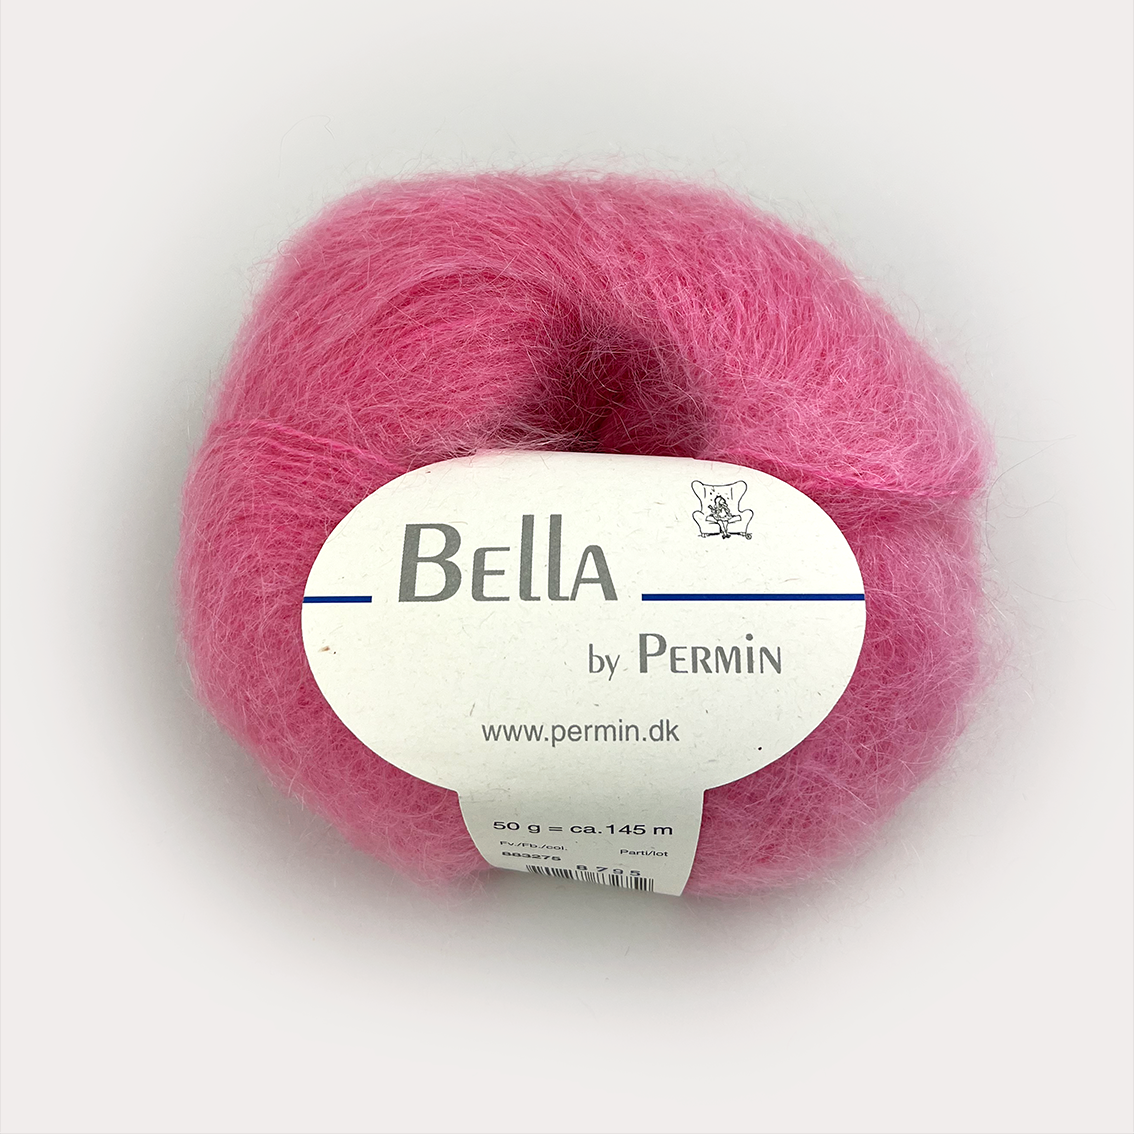 Bella | by Permin